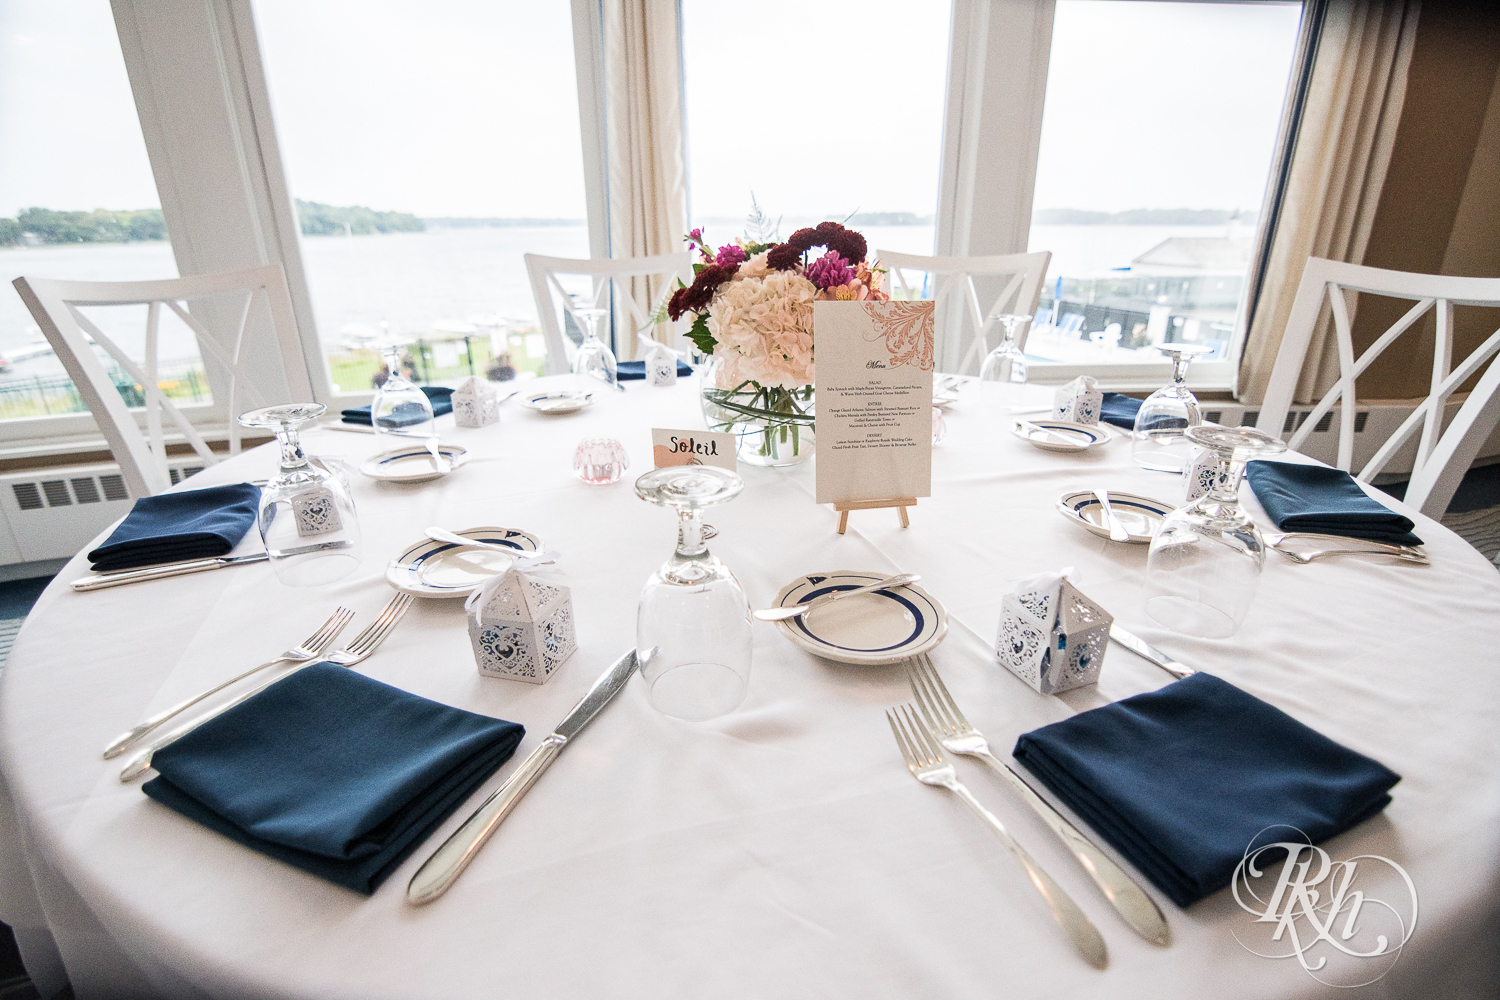 Wedding reception setup at White Bear Yacht Club in White Bear Lake, Minnesota.